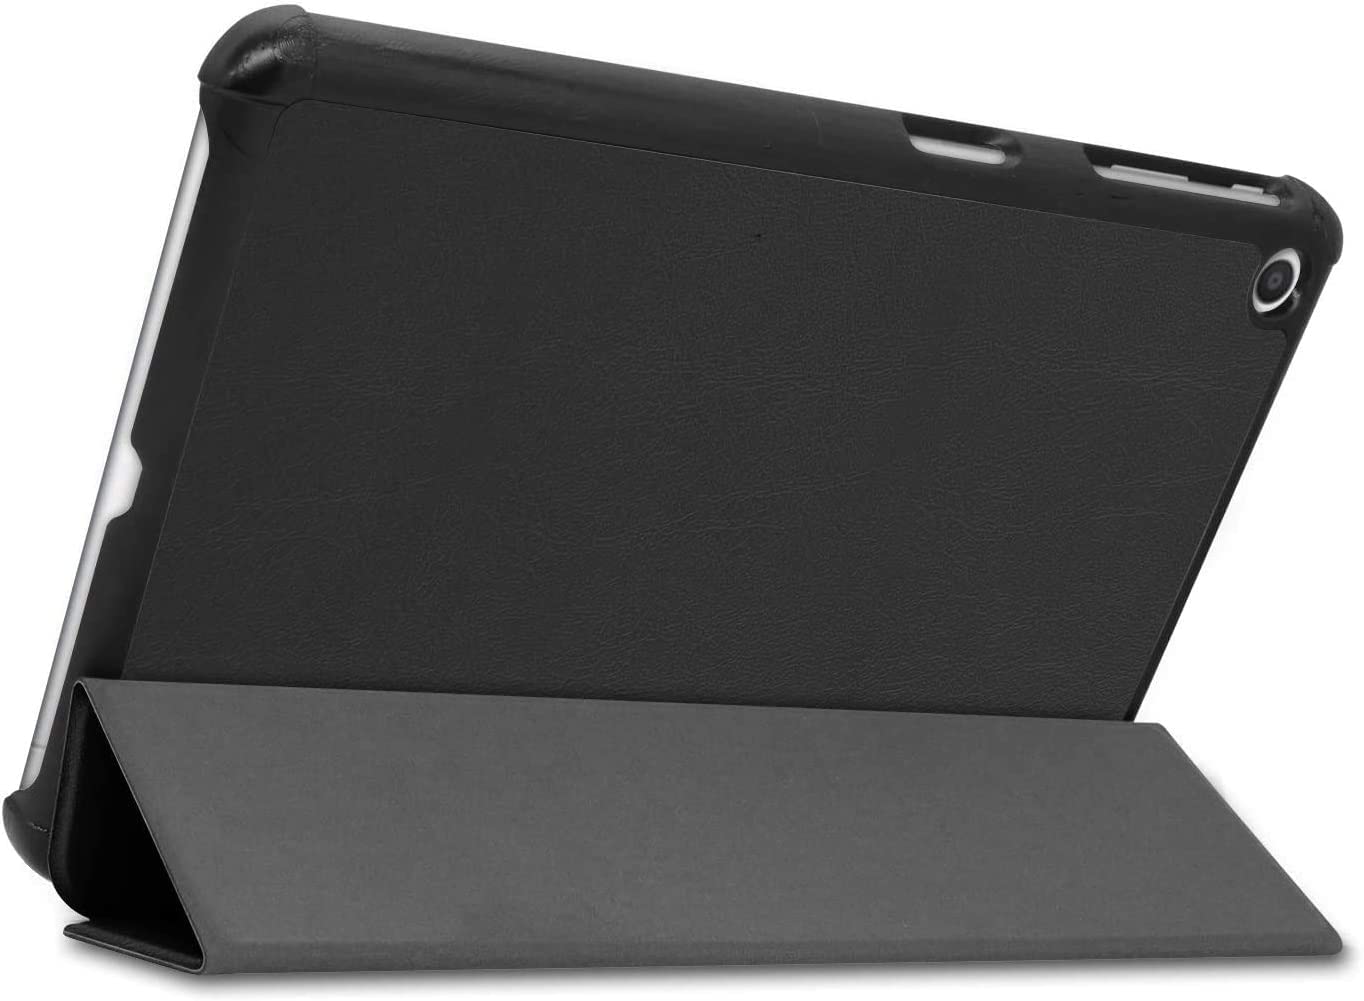 LG G Pad 5 10.1-inch (1920x1200) 4GB LTE Unlock Tablet, Qualcomm MSM8996 Snapdragon Processor, 4GB, 32GB, Bluetooth, Fingerprint Sensor, Android 9.0 + Accessories